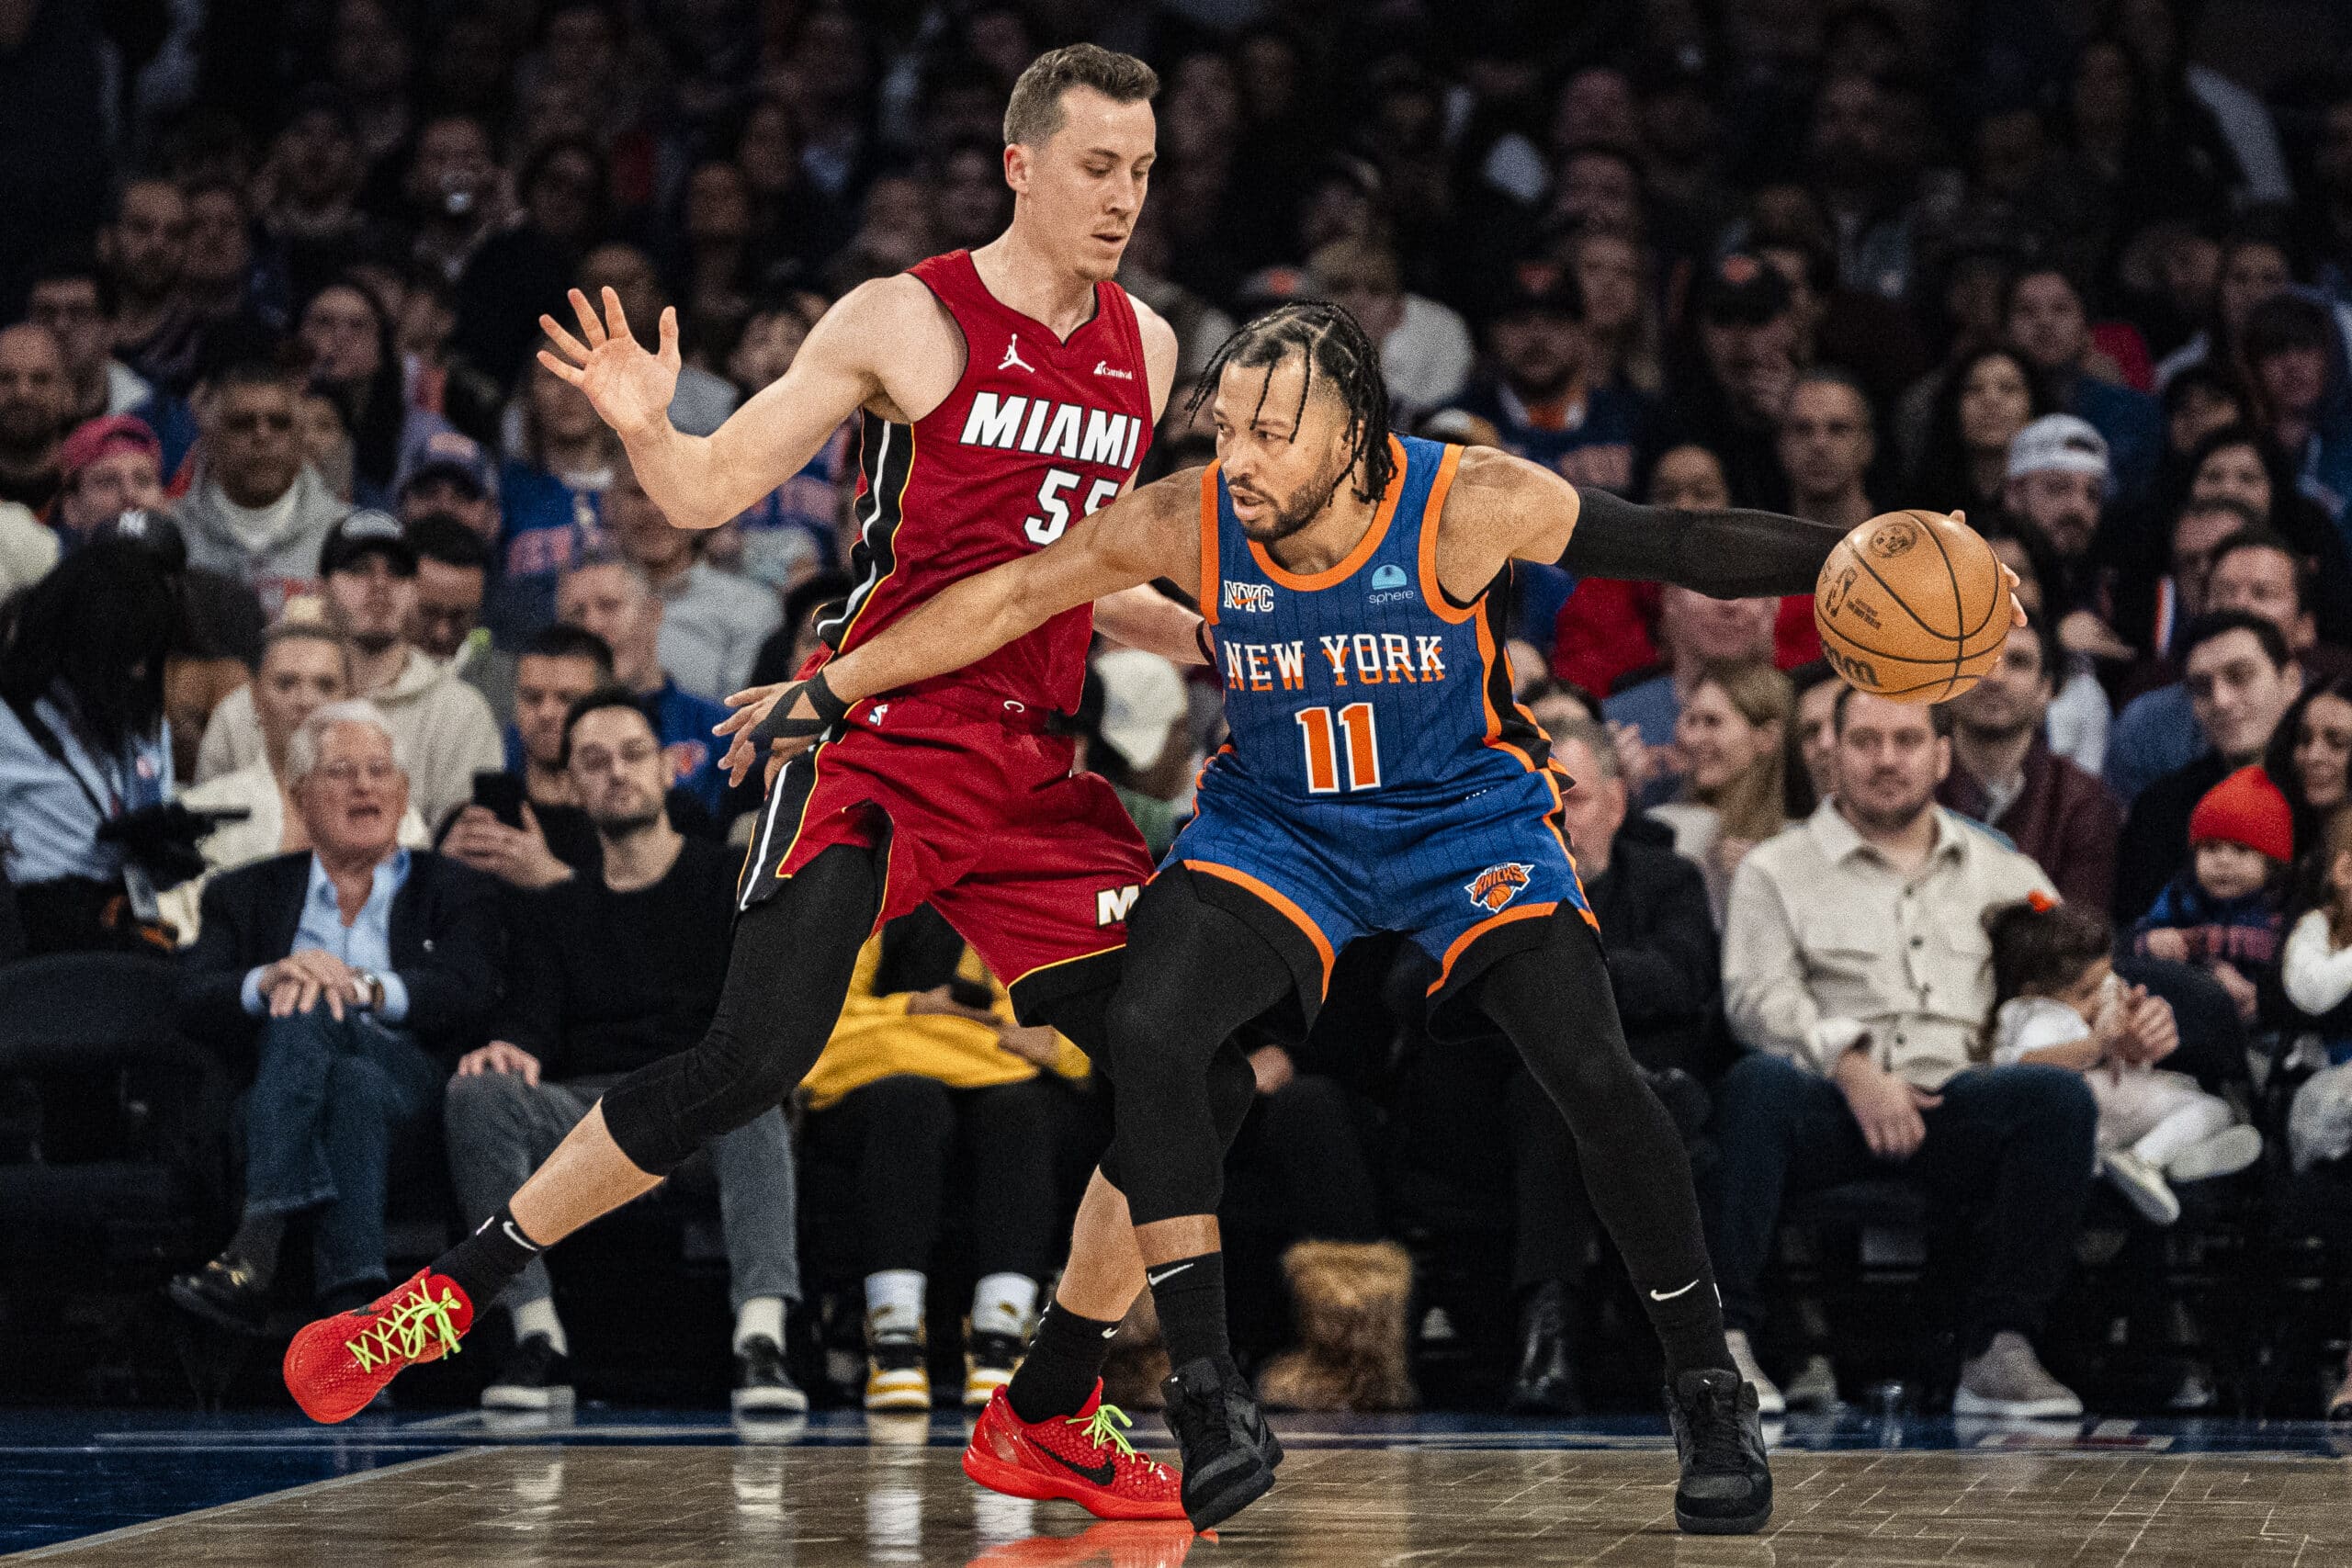 Jalen Brunson scores 34 points to lead the Knicks past the Warriors 119-112